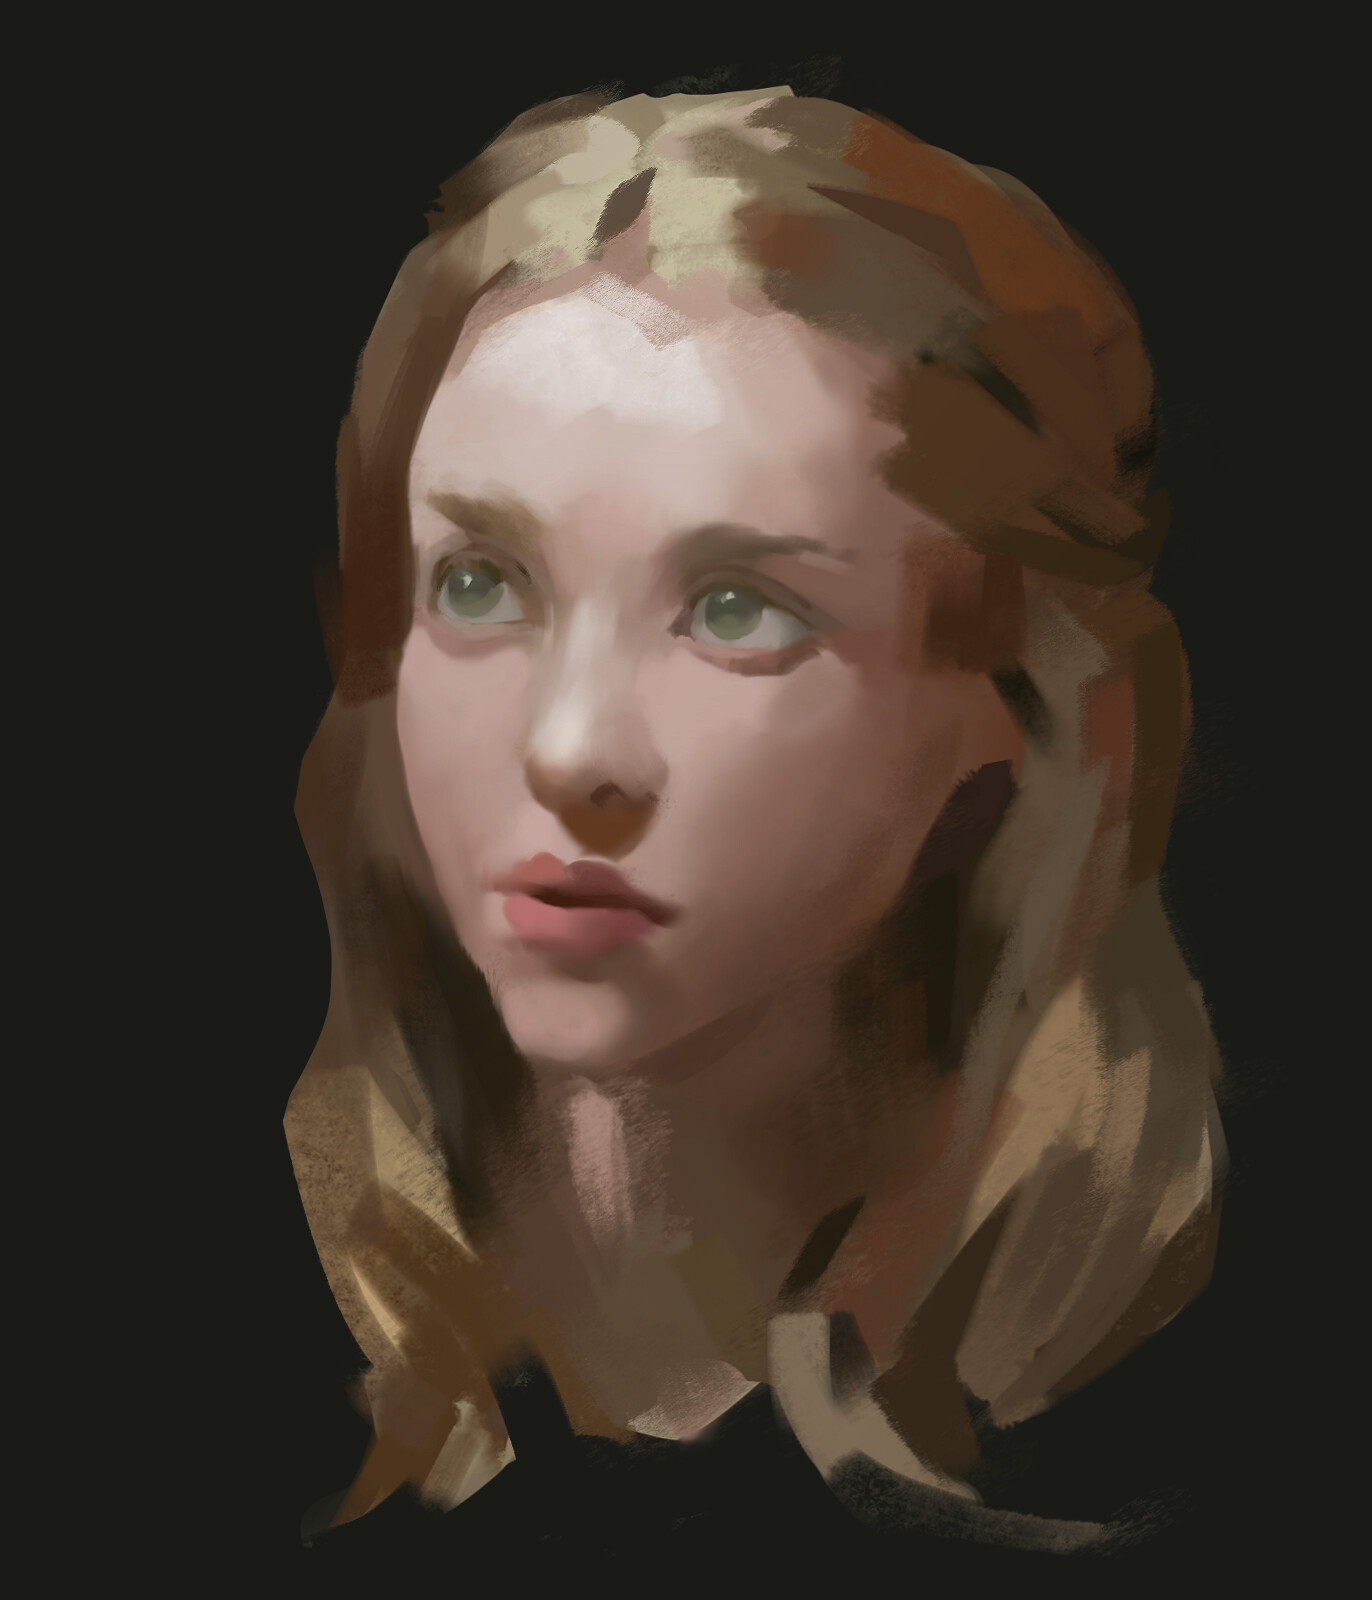 ArtStation - Quick Portrait Study